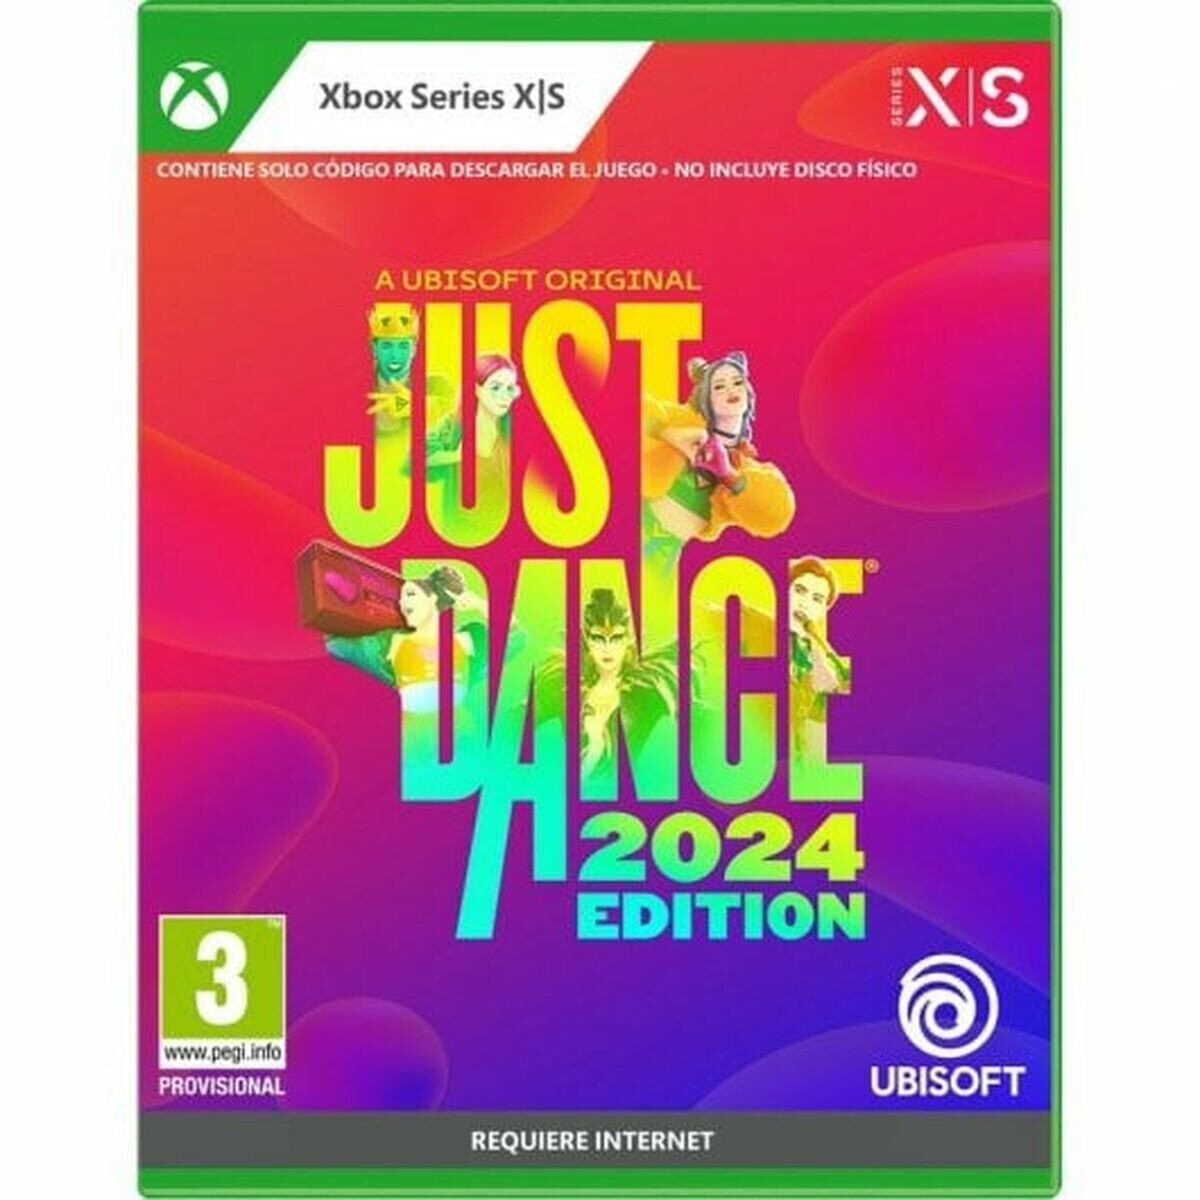 Xbox Series X Video Game Ubisoft Just Dance 2024